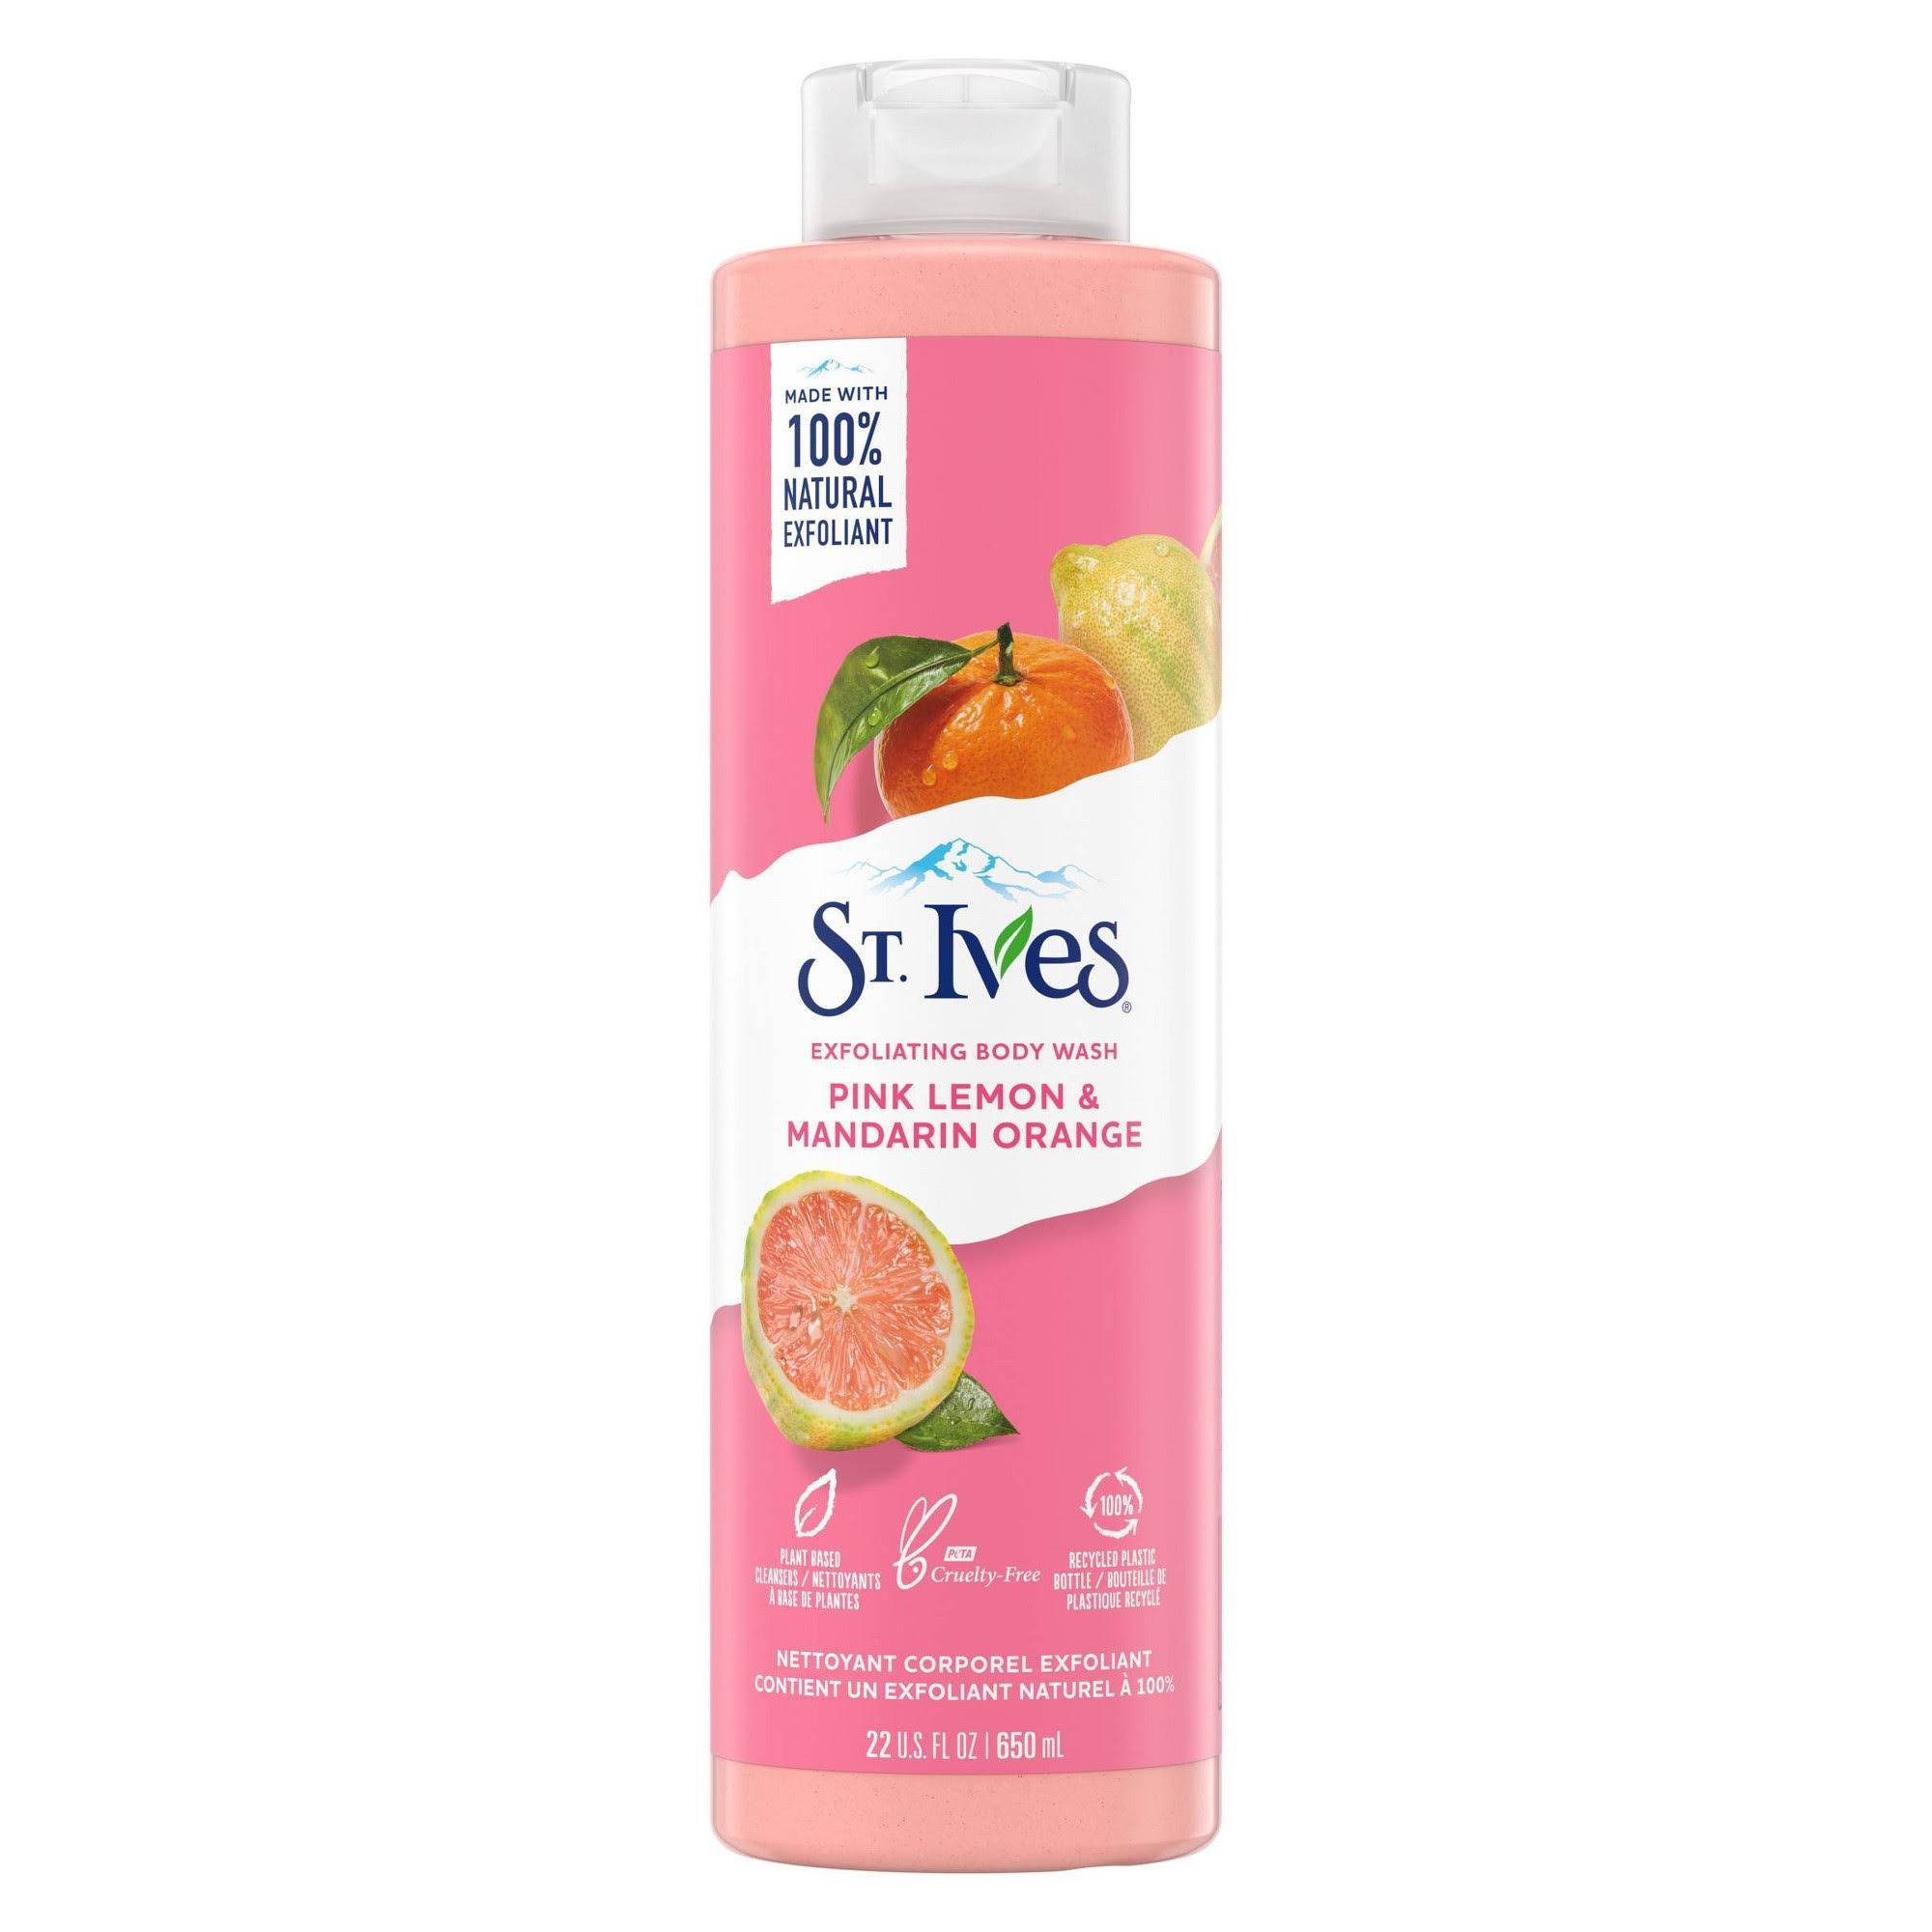 St. Ives Exfoliating Body Wash, Pink Lemon & Mandarin Orange - 22 oz